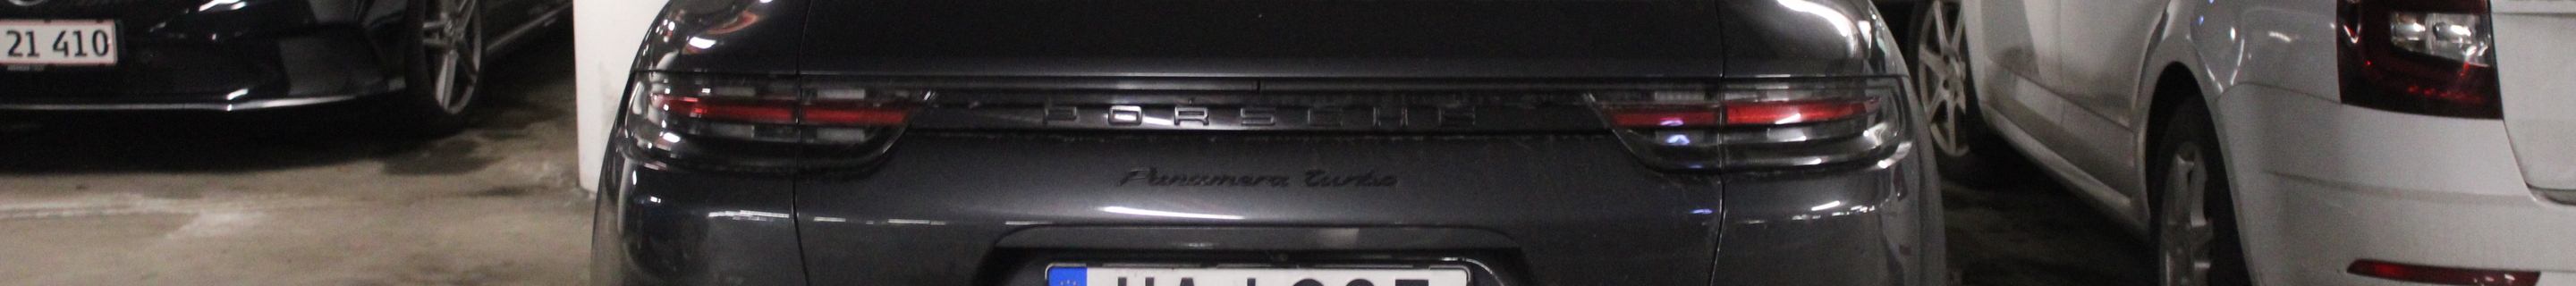 Porsche 971 Panamera Turbo Sport Turismo